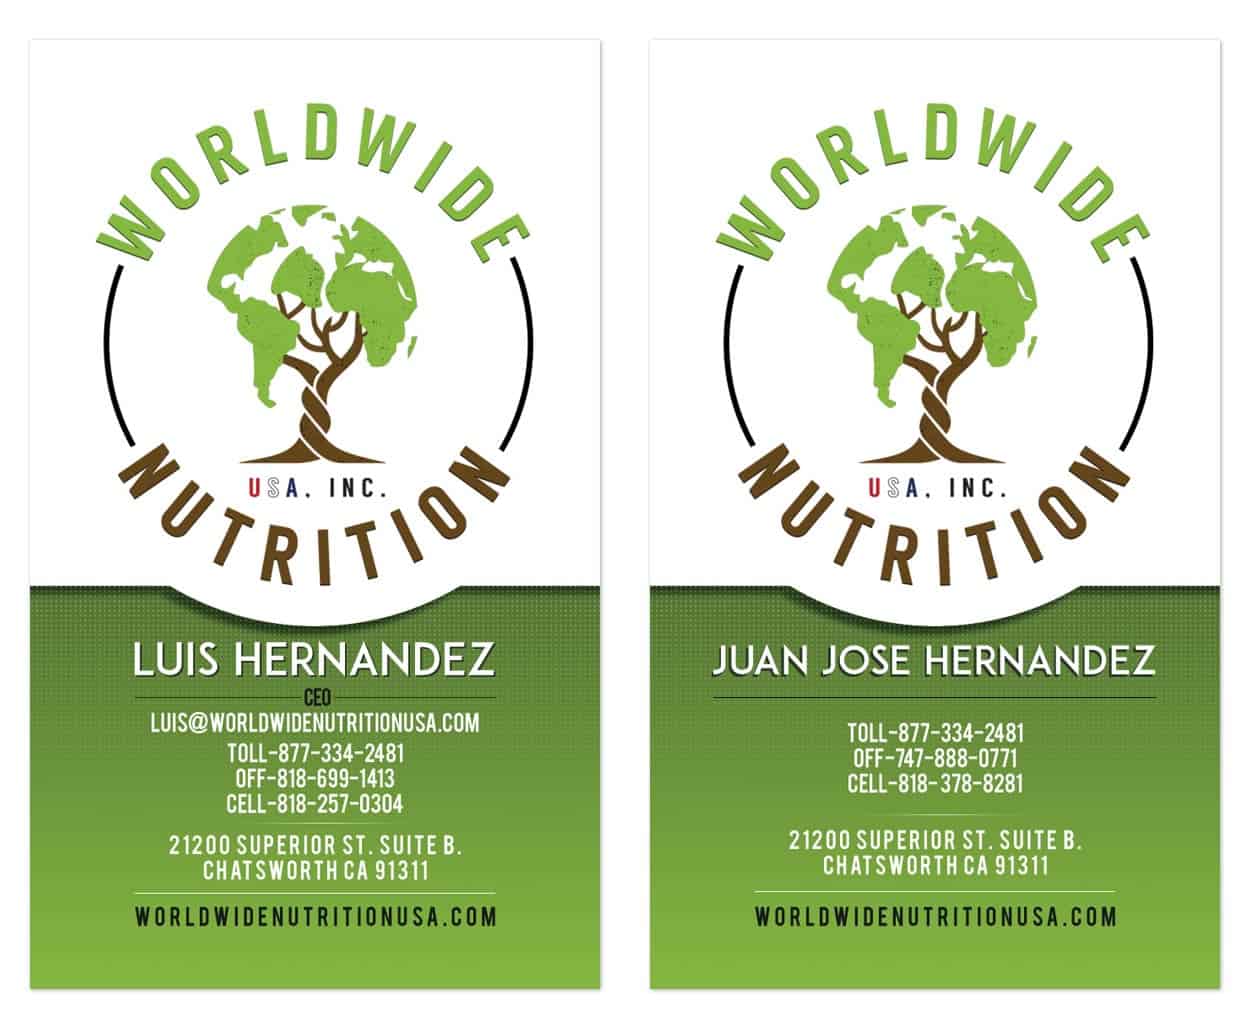 worldwide nutrition - business card design